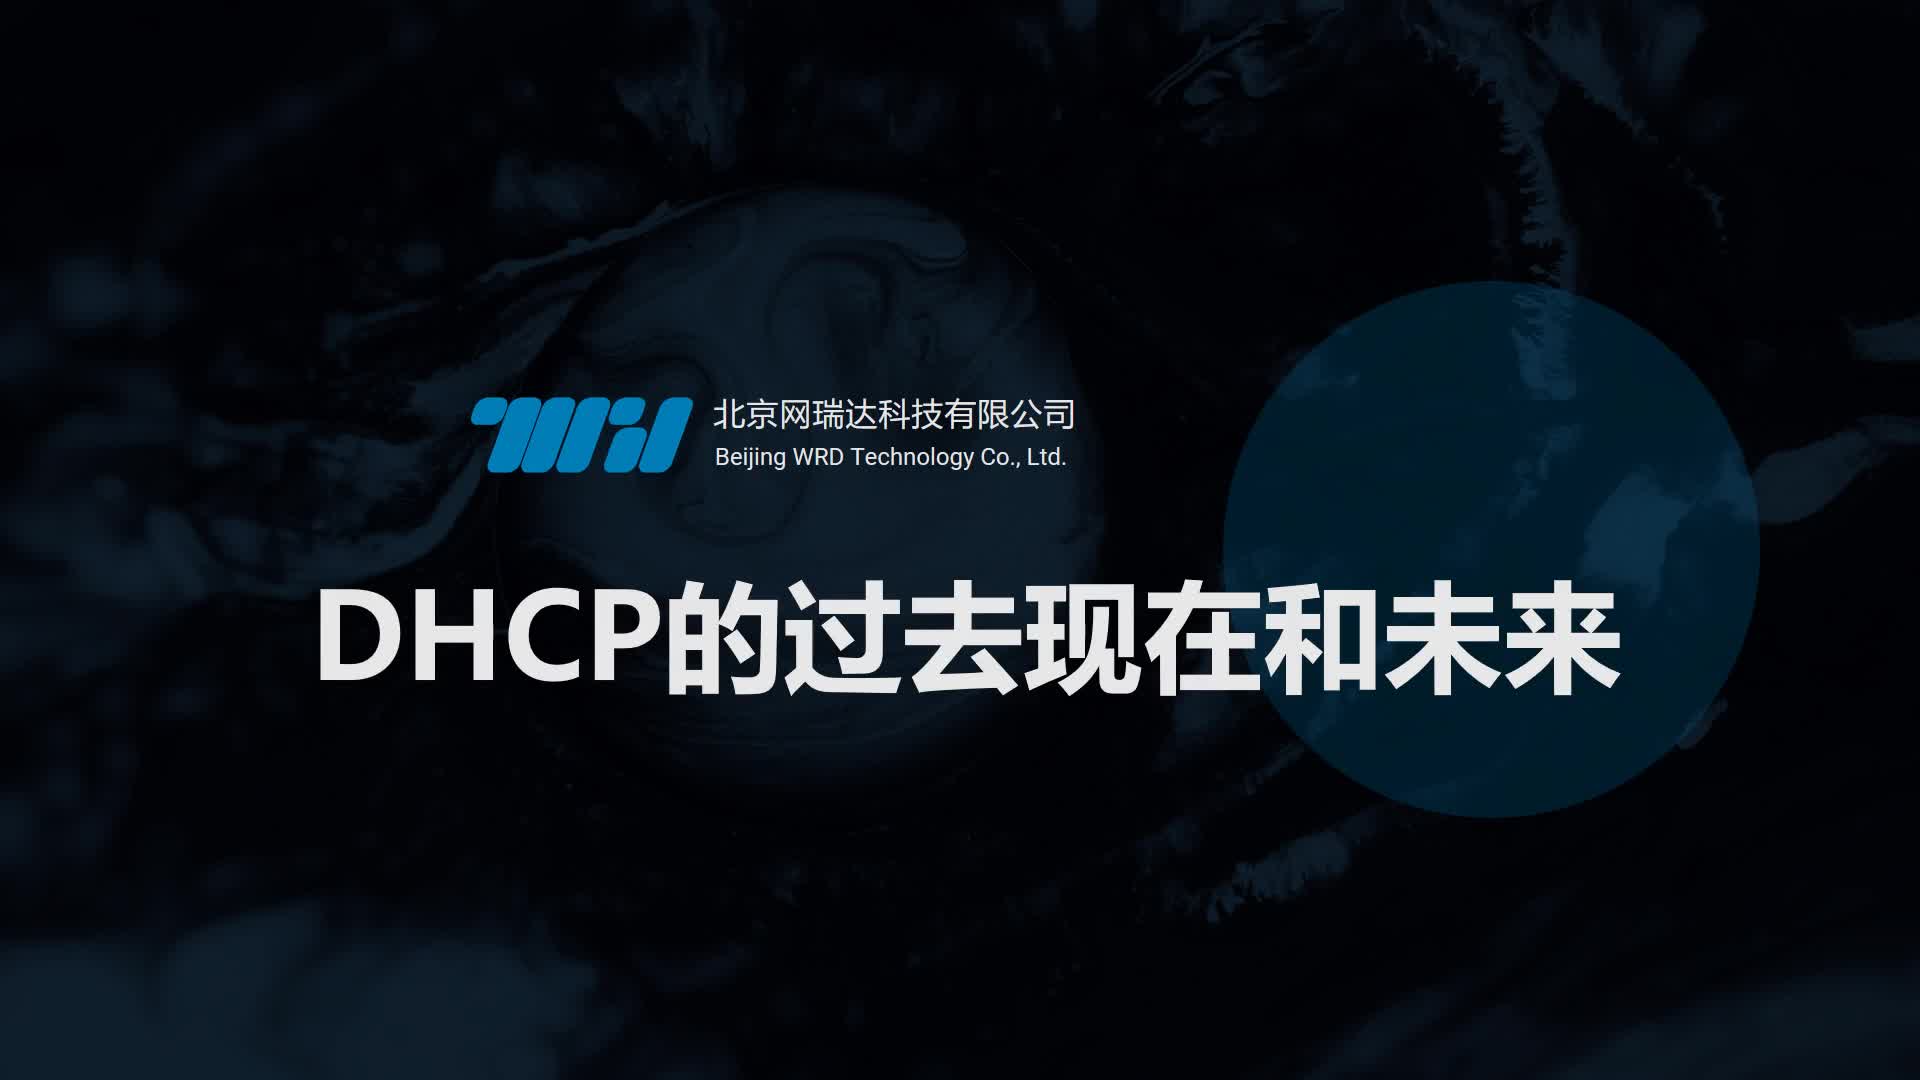 152-DHCP-DHCP的过去现在和未来